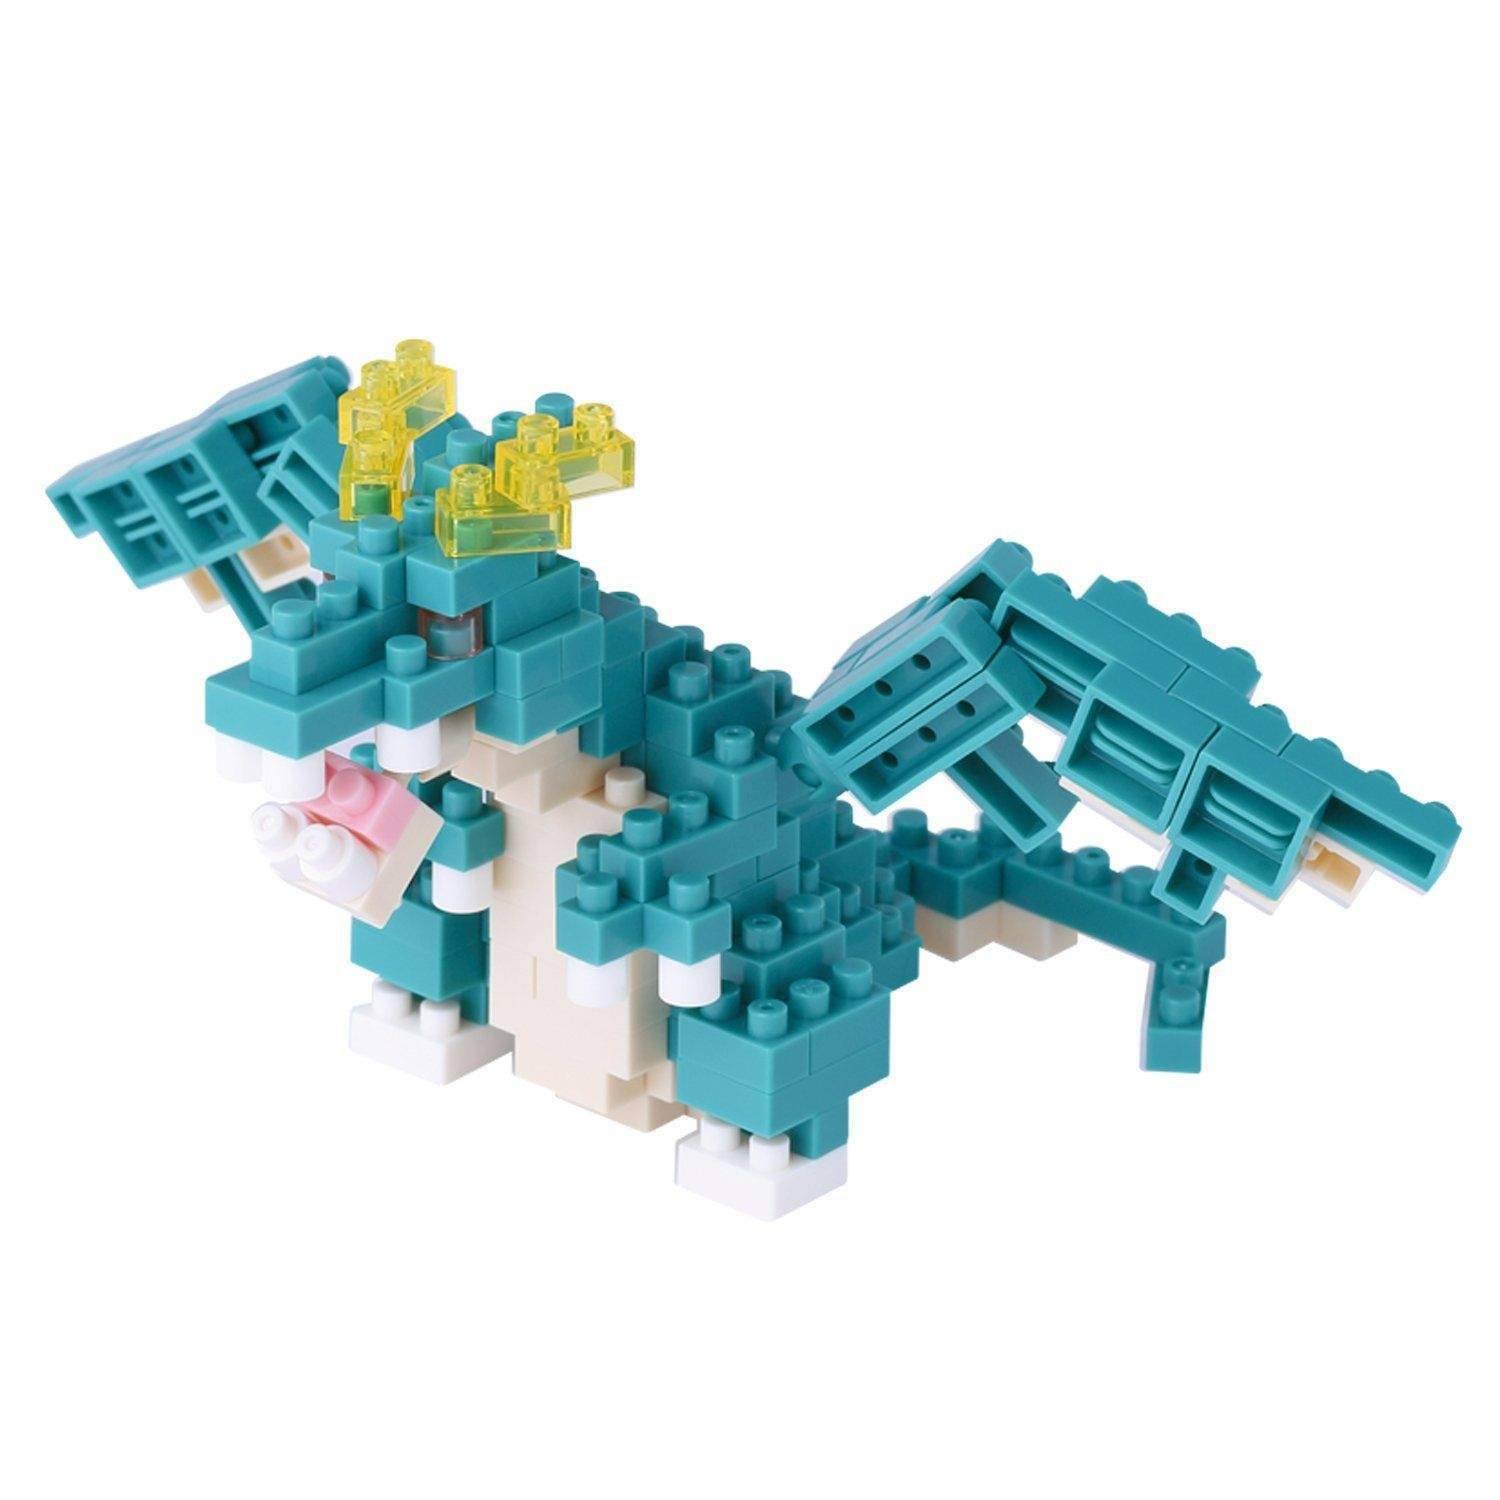 Kawada Dragon Nanoblock Micro Sized Building Block Mini Construction Toy